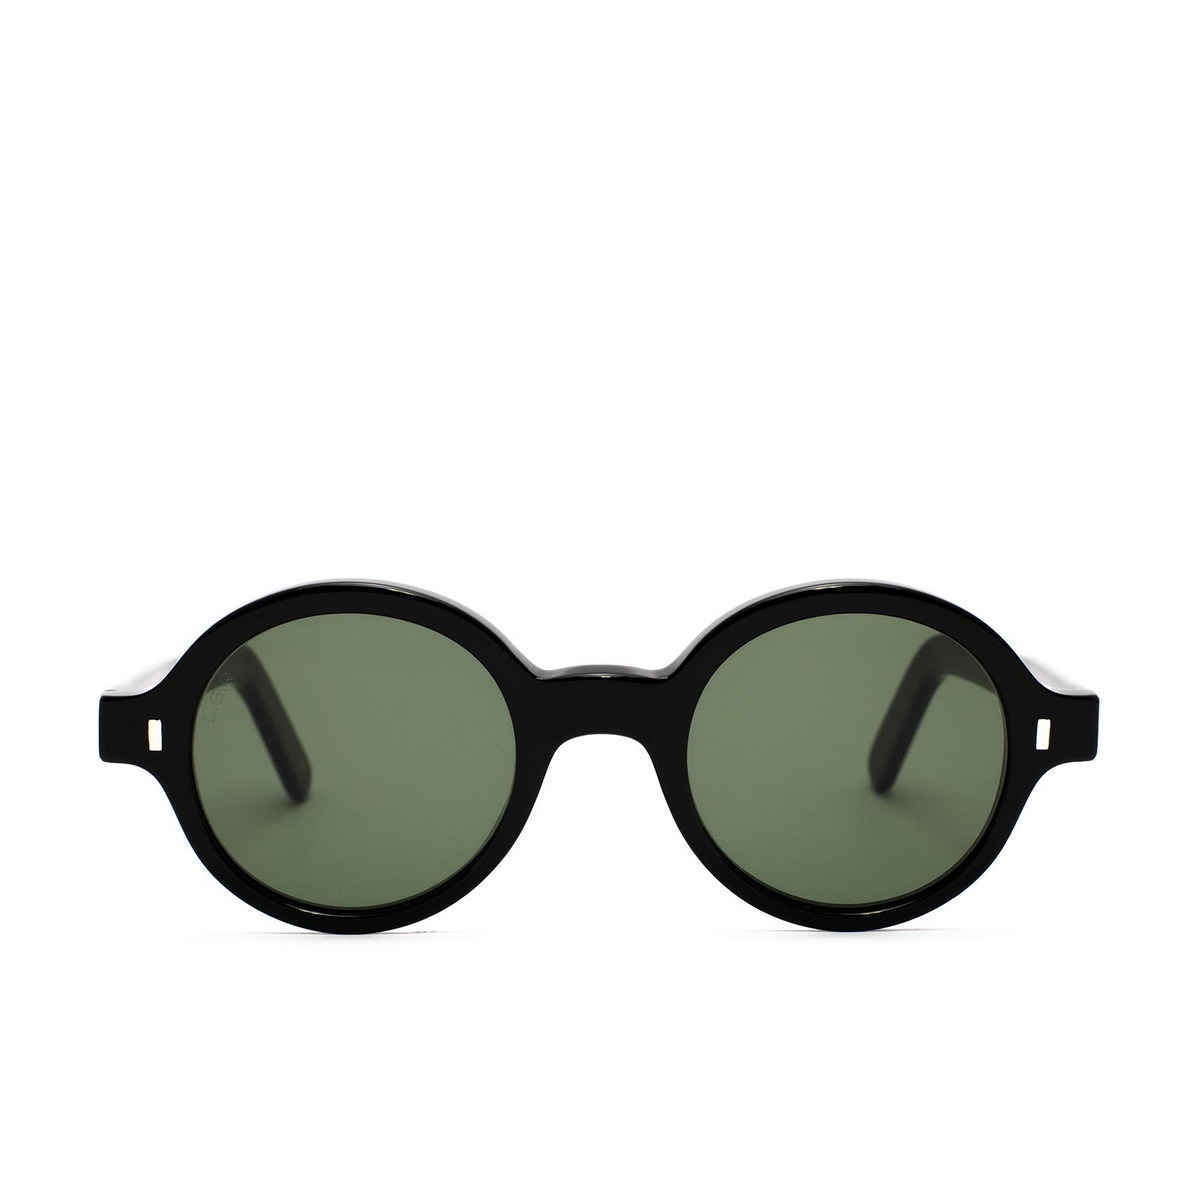 L.G.R REUNION BOLD Sunglasses 01 Black - front view